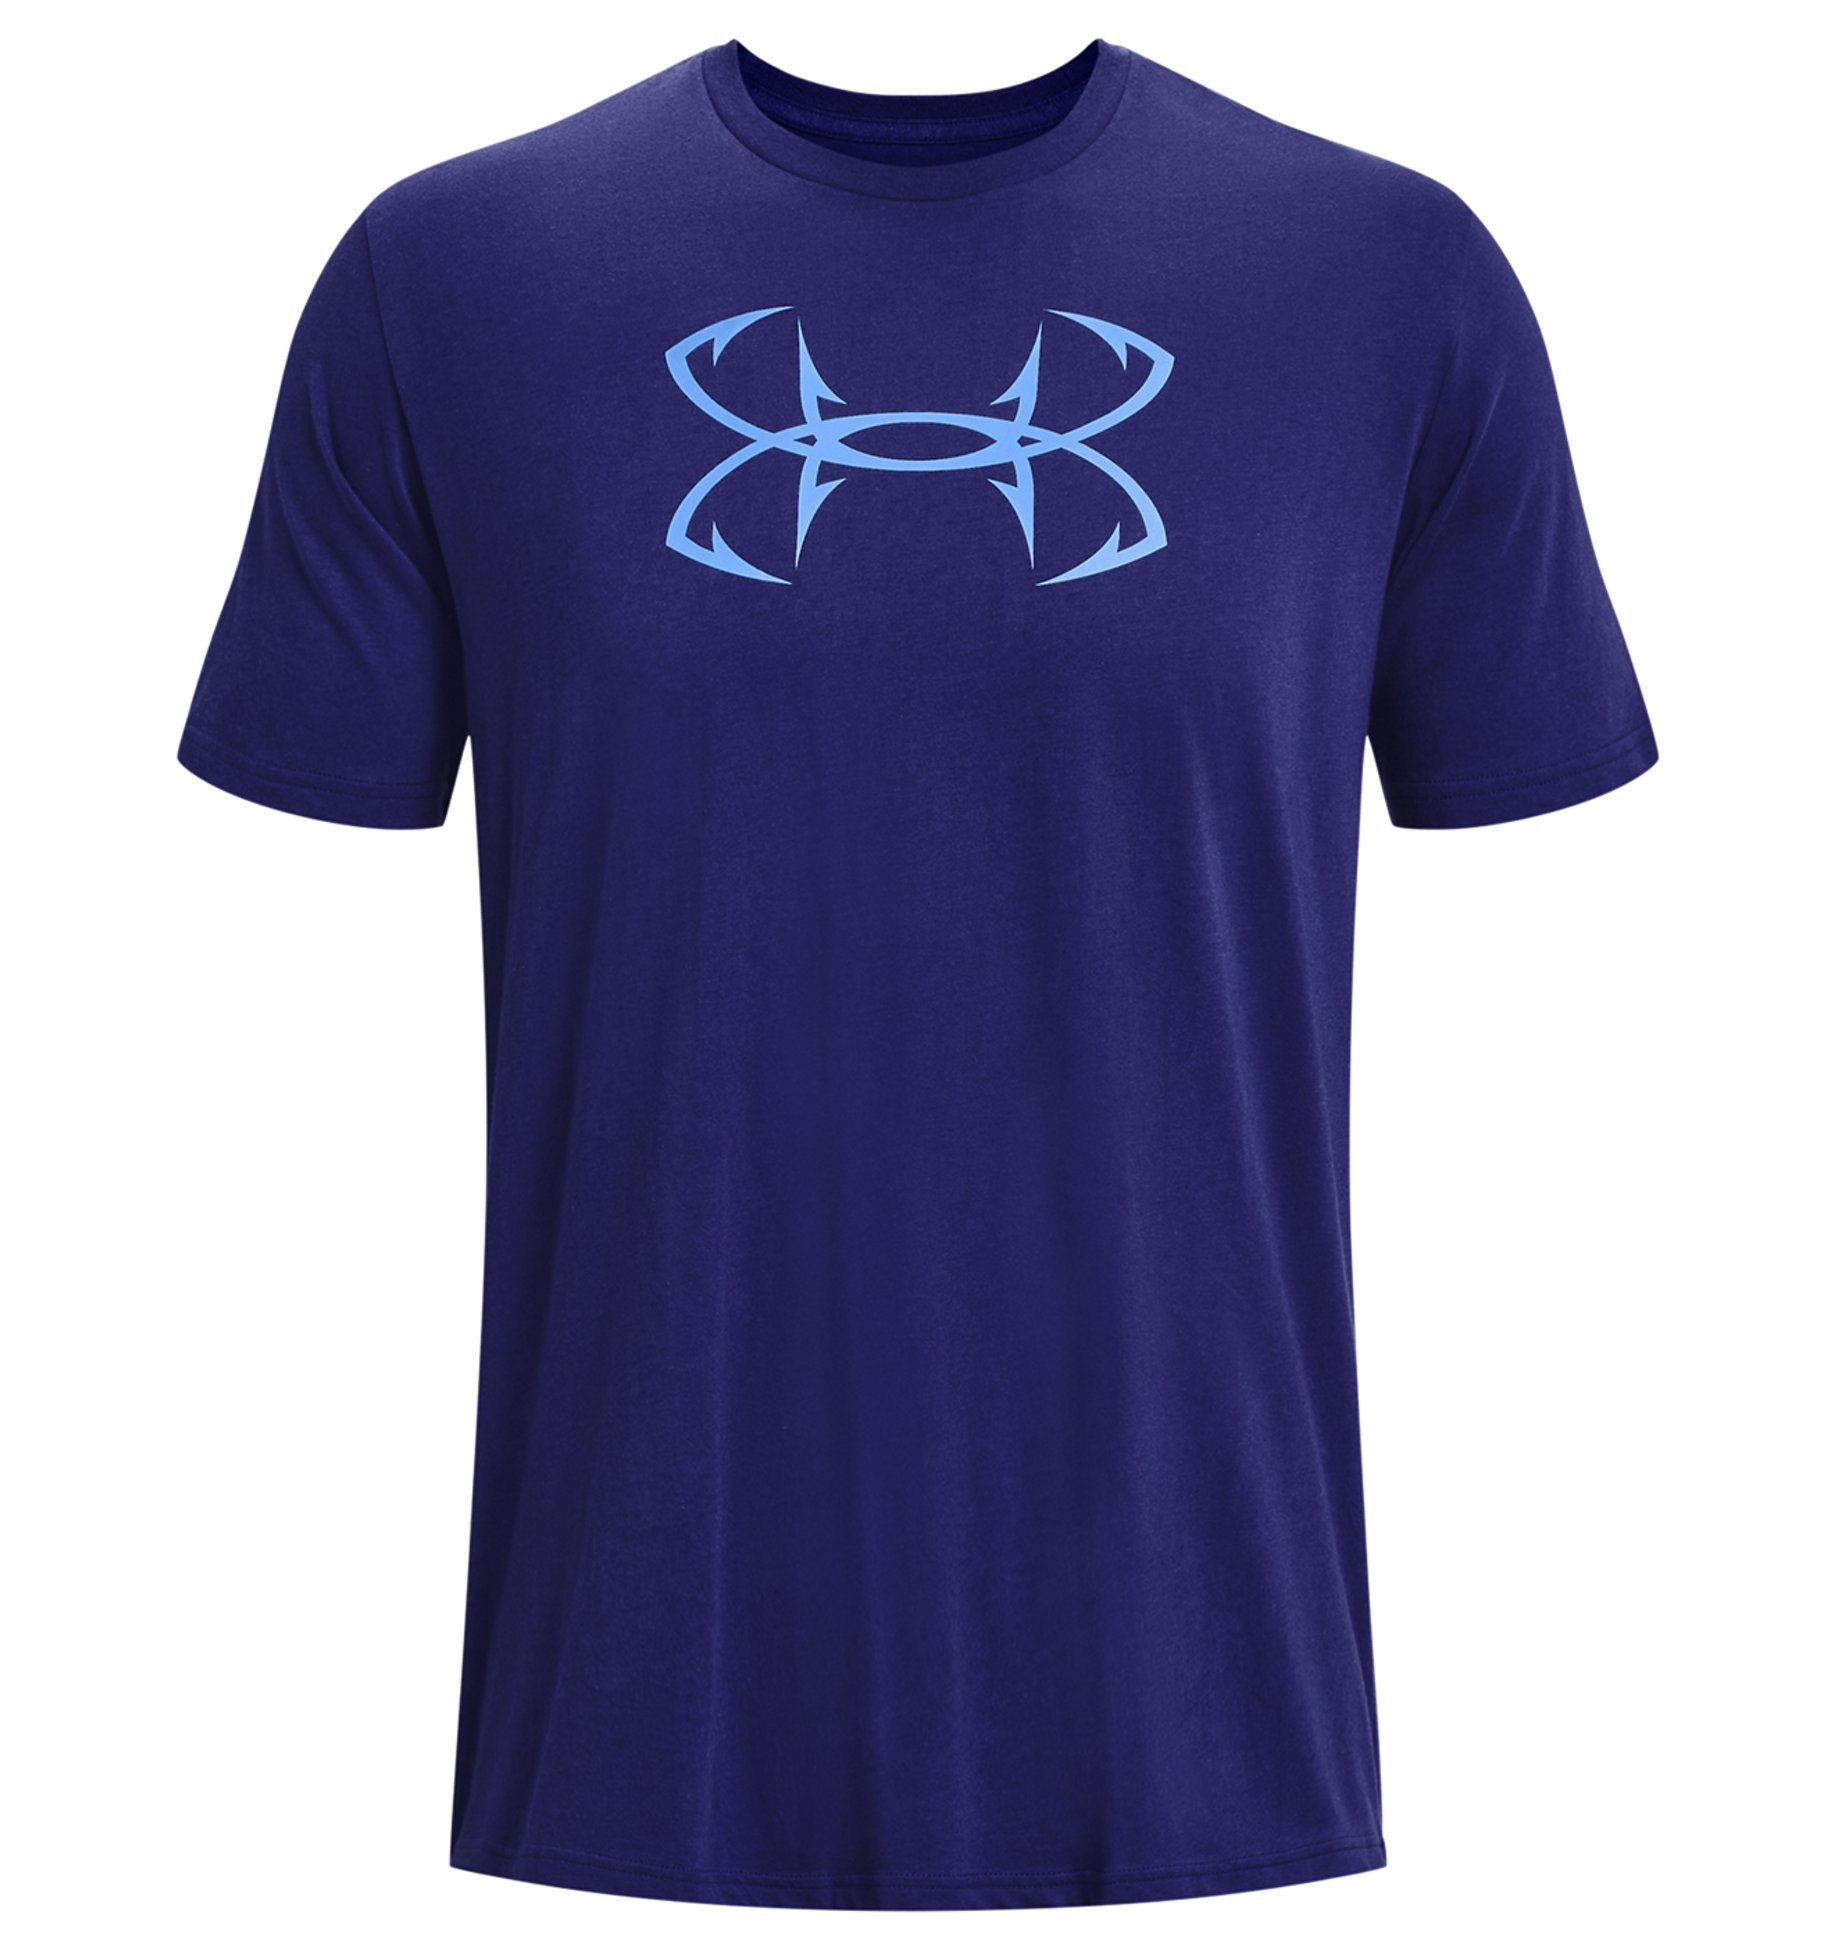 Under Armour Fish Hook Logo T-Shirt 1331197 - Sonar Blue, XL